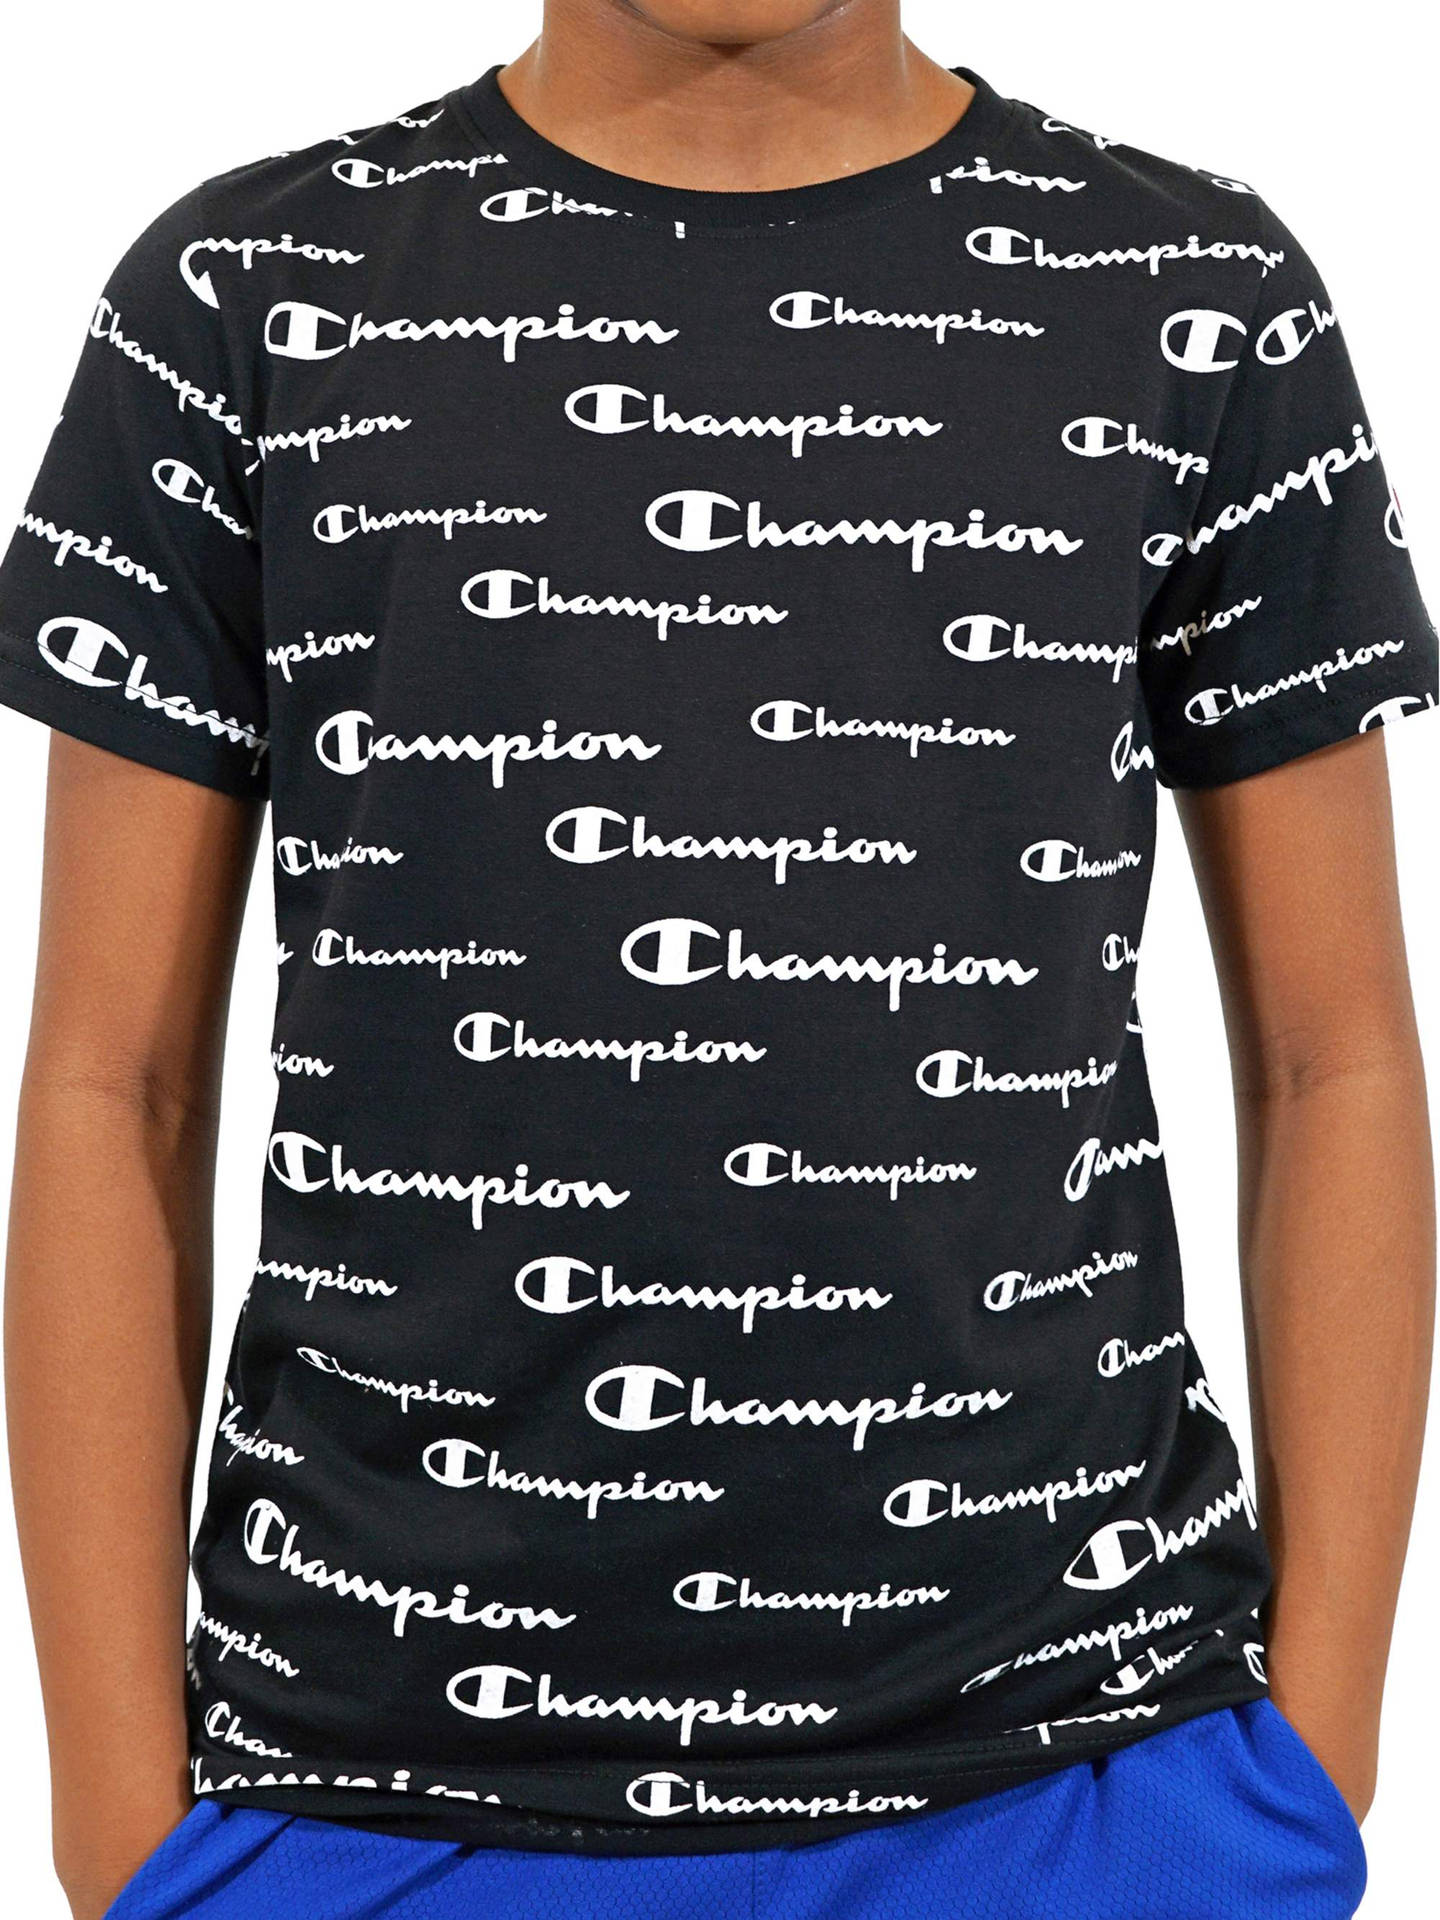 Black Champion Logo Shirt Background